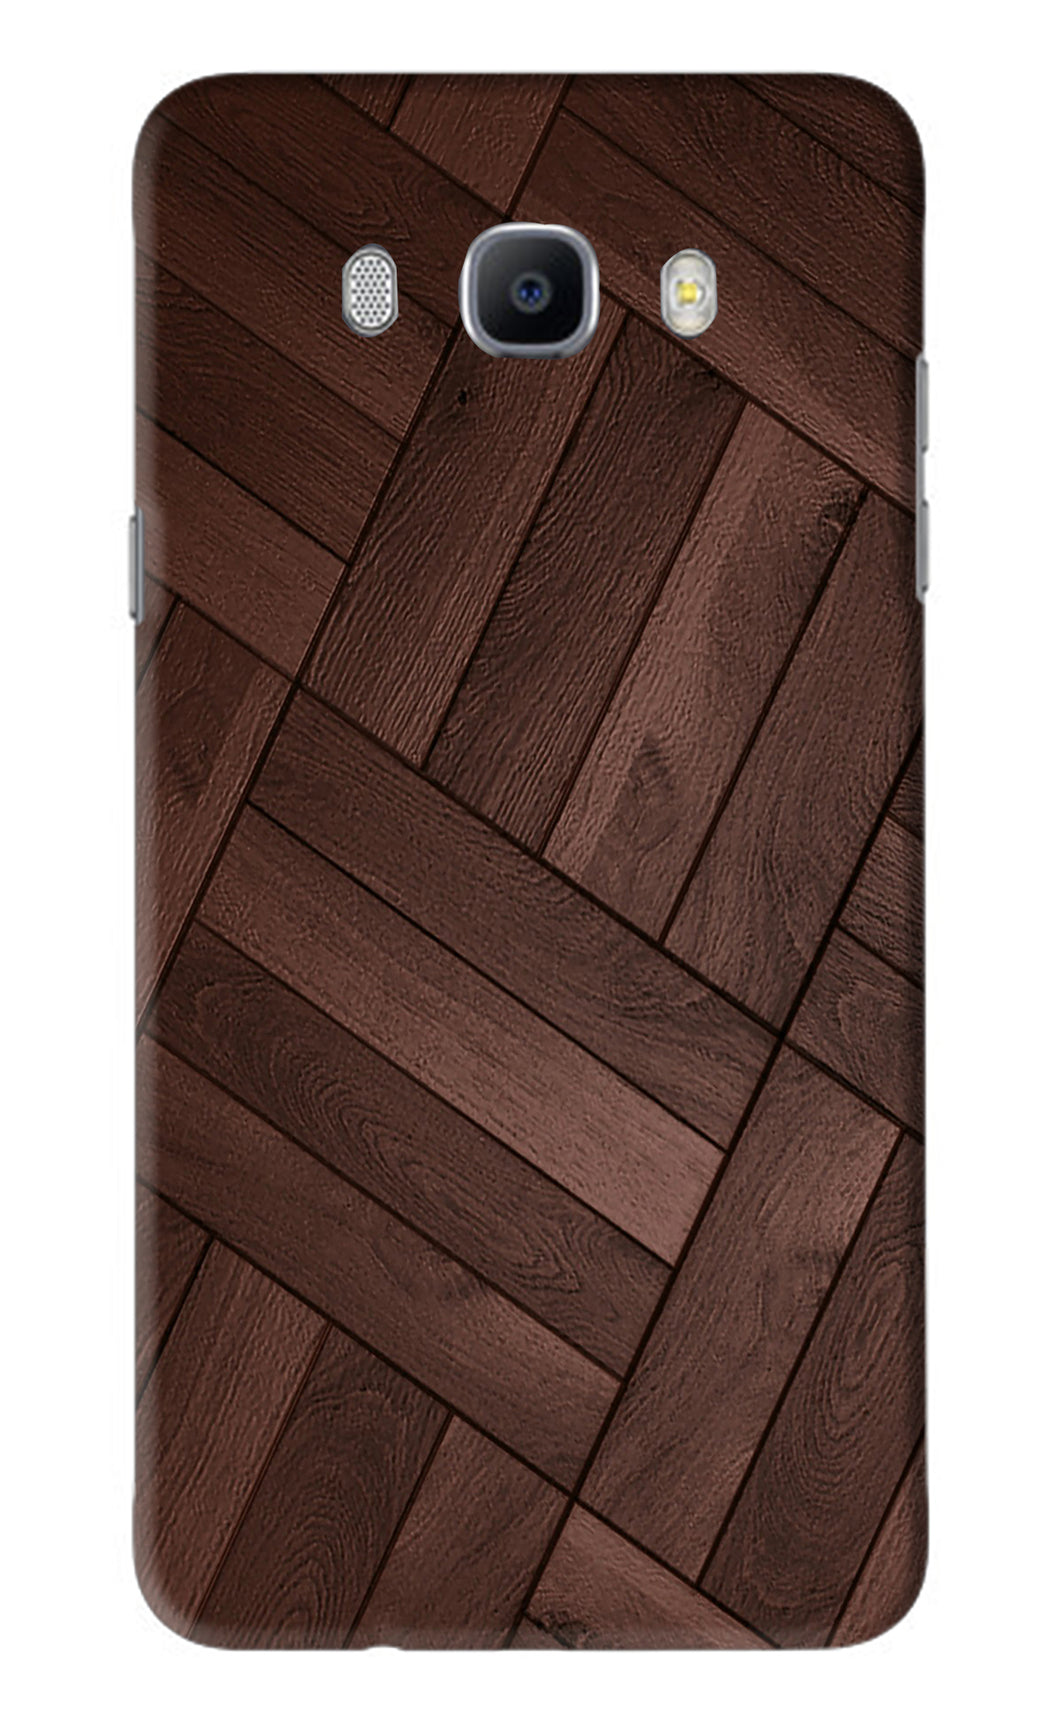 Wooden Texture Design Samsung Galaxy J7 2016 Back Skin Wrap